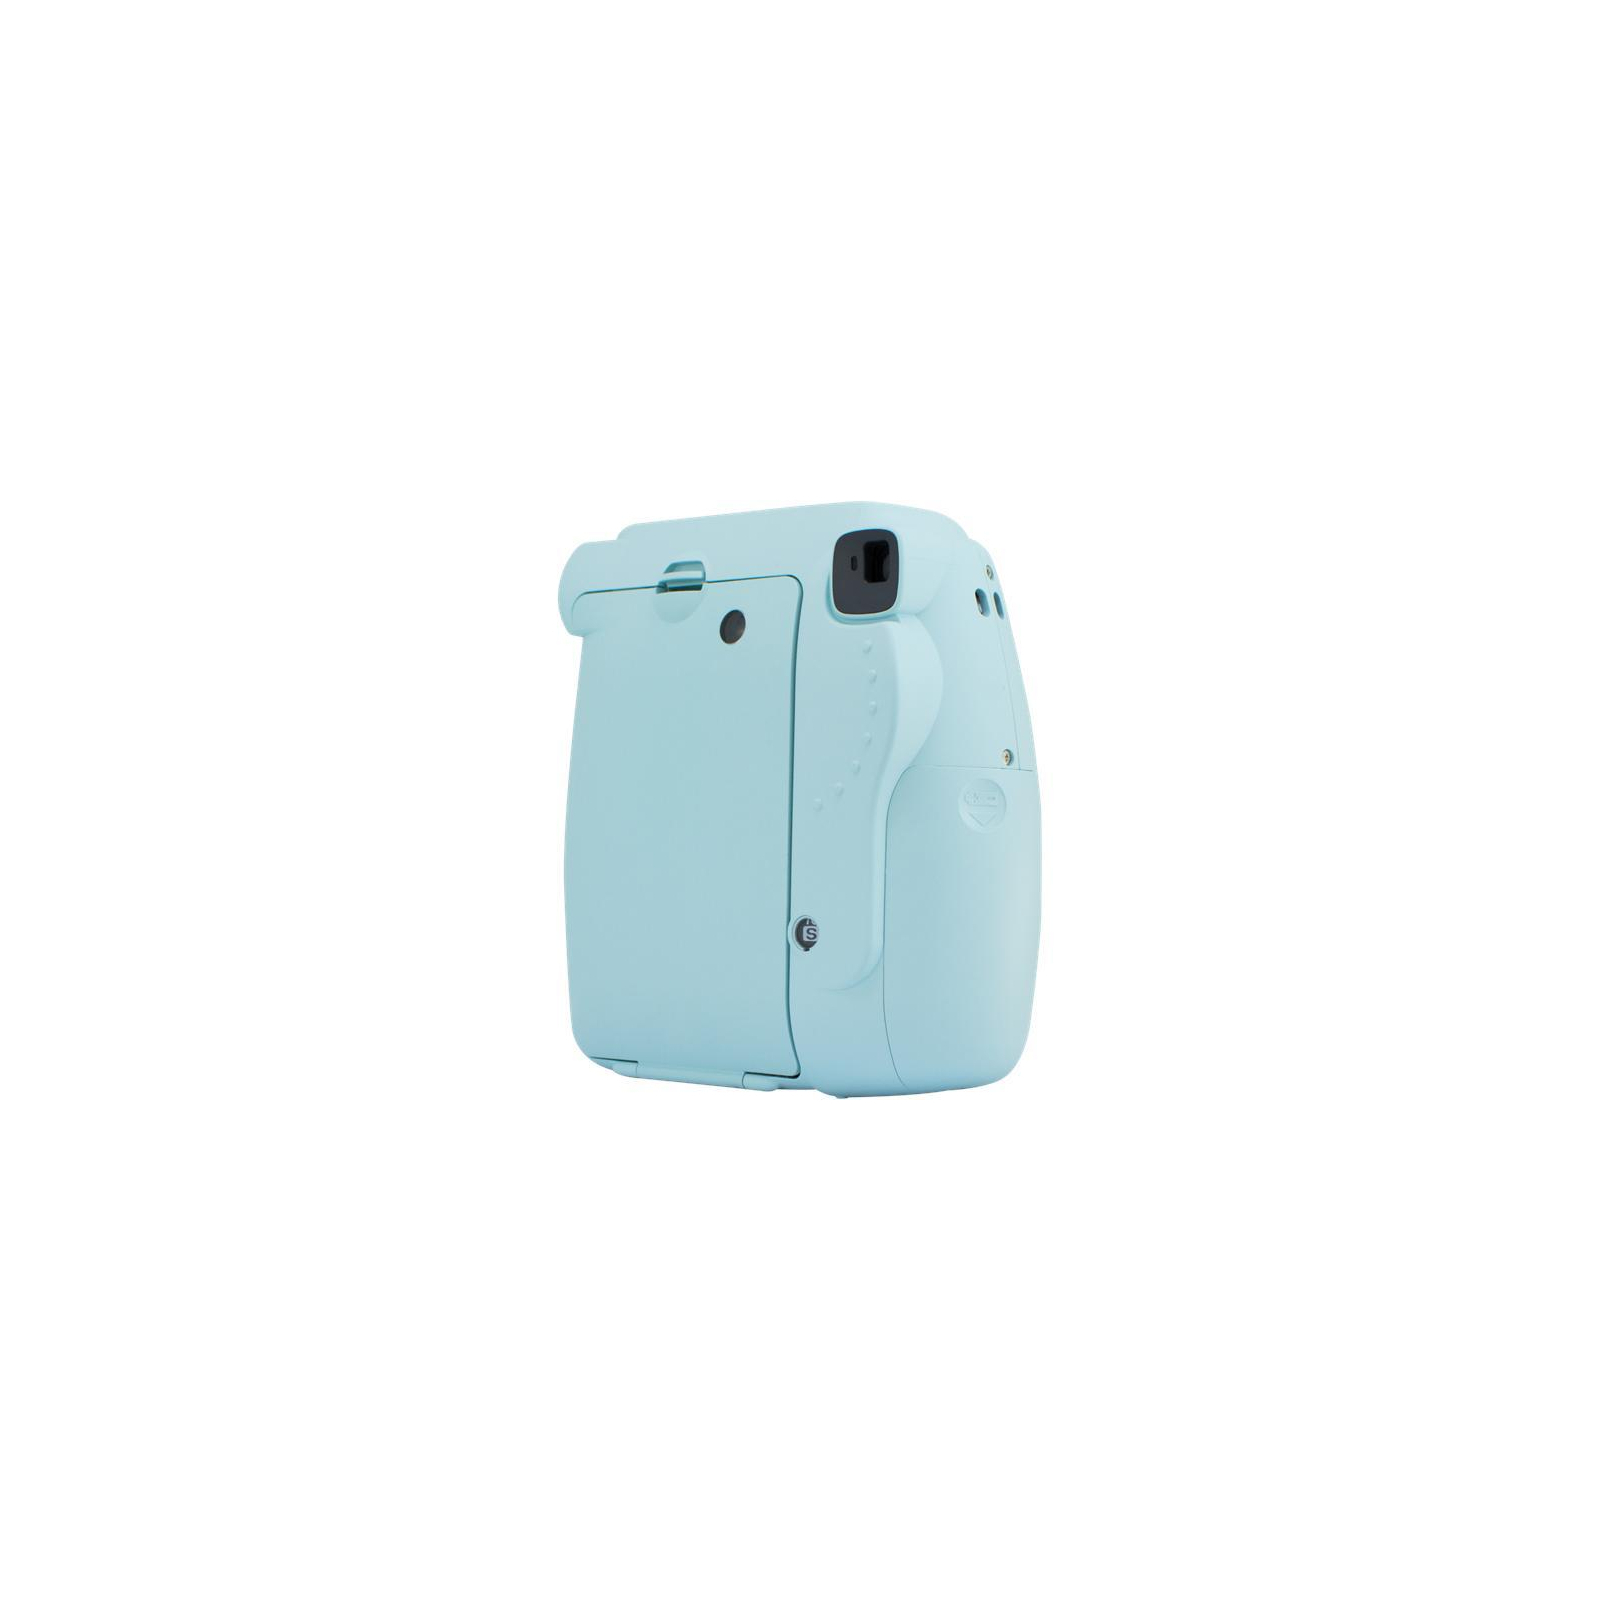 Камера моментальной печати Fujifilm Instax Mini 9 CAMERA ICE BLUE TH EX D (16550693) изображение 9